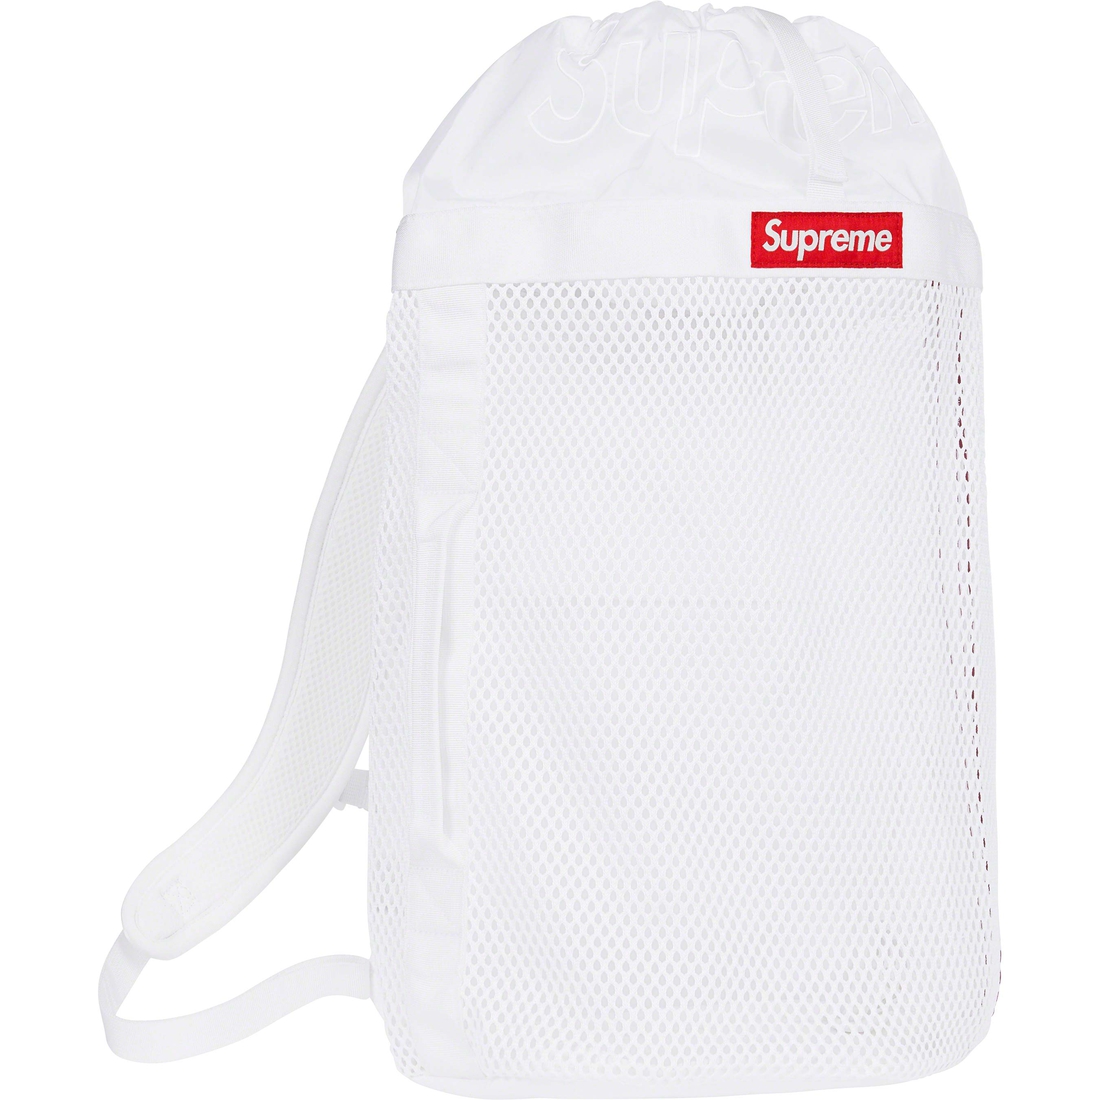 Supreme Supreme FW17 backpack white